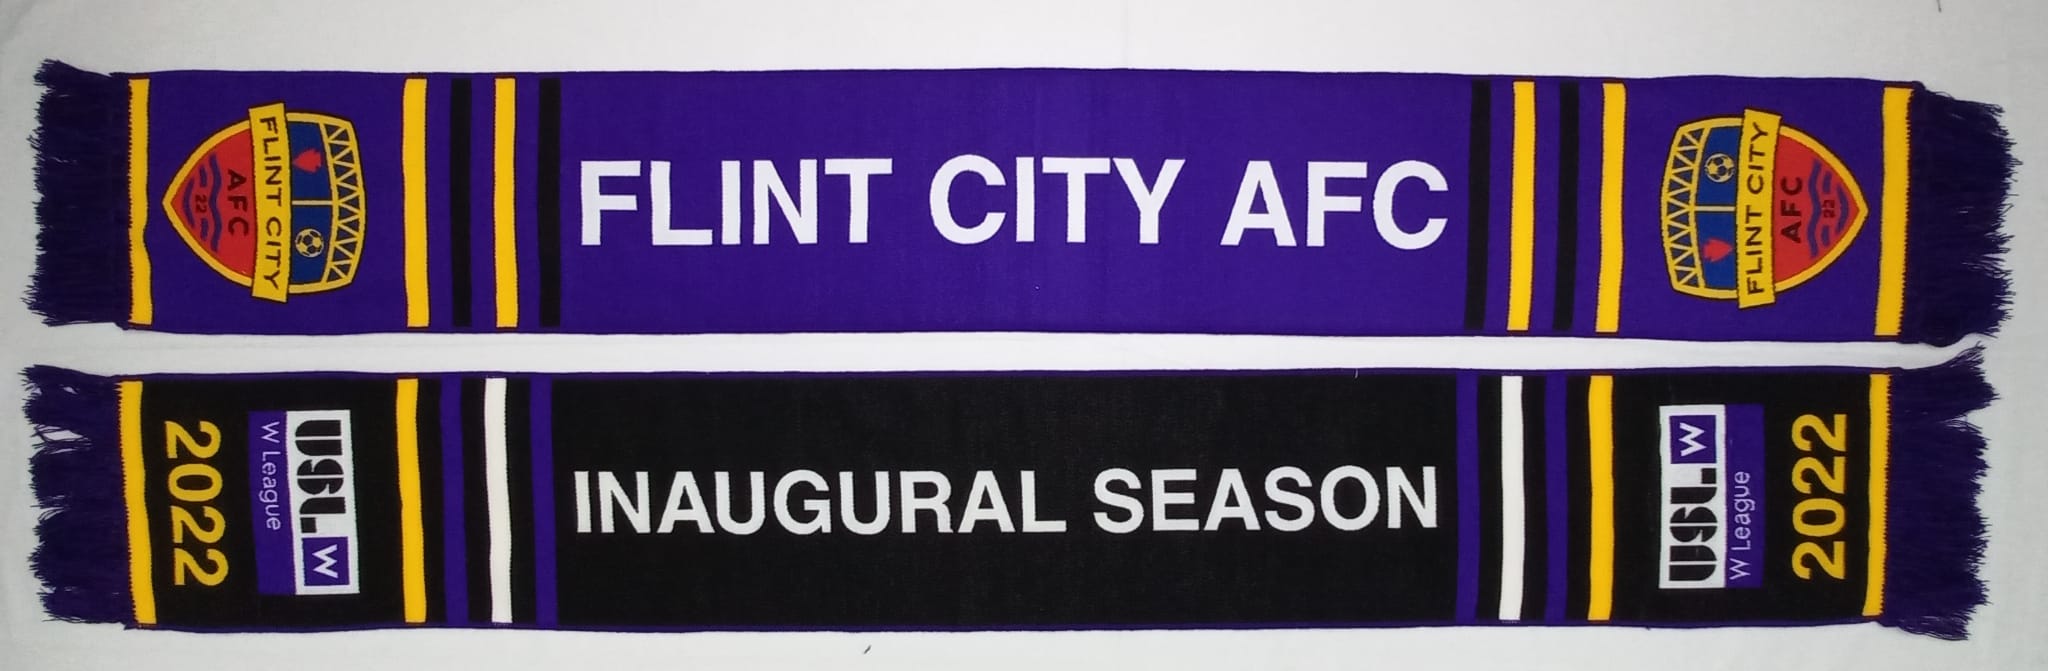 Flint City AFC Scarf Inaugural Season (purple) - USL W League